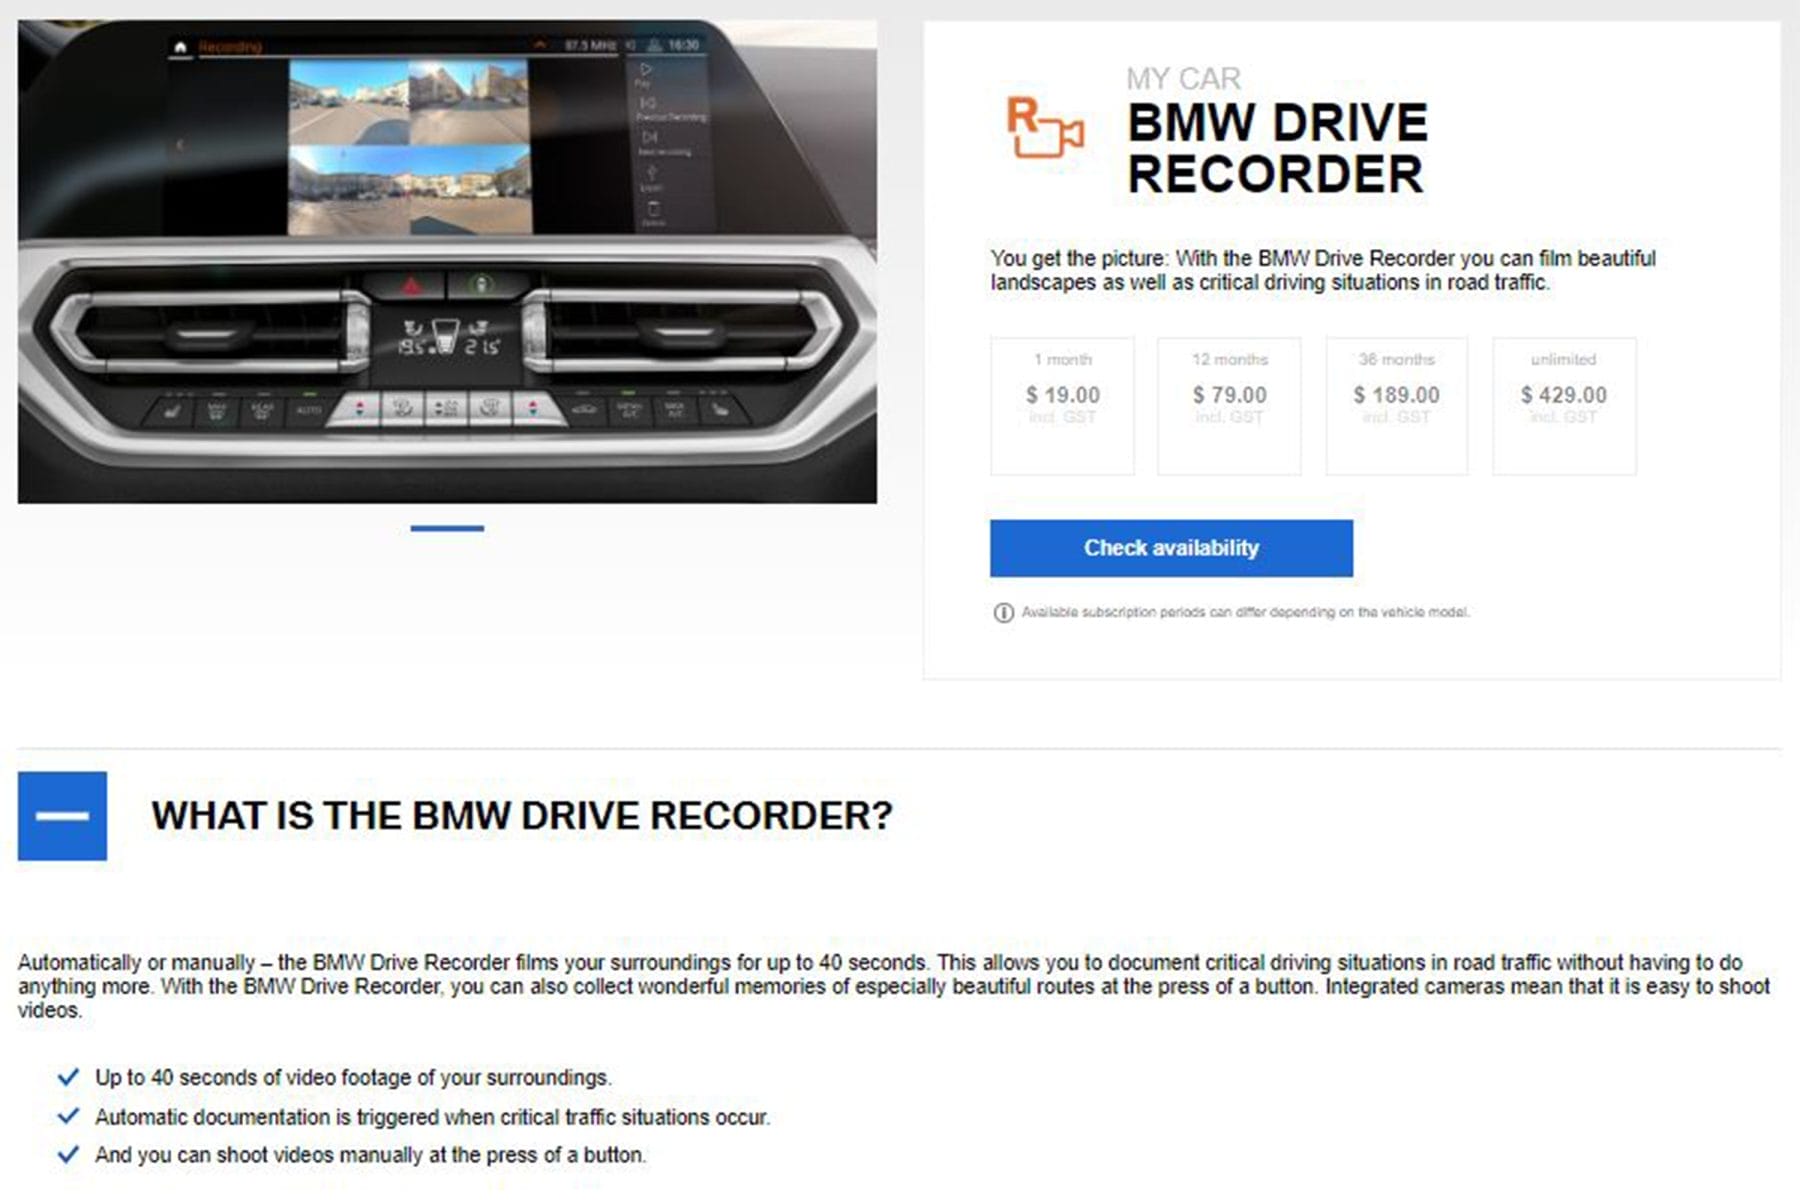 BMWDriveRecorder